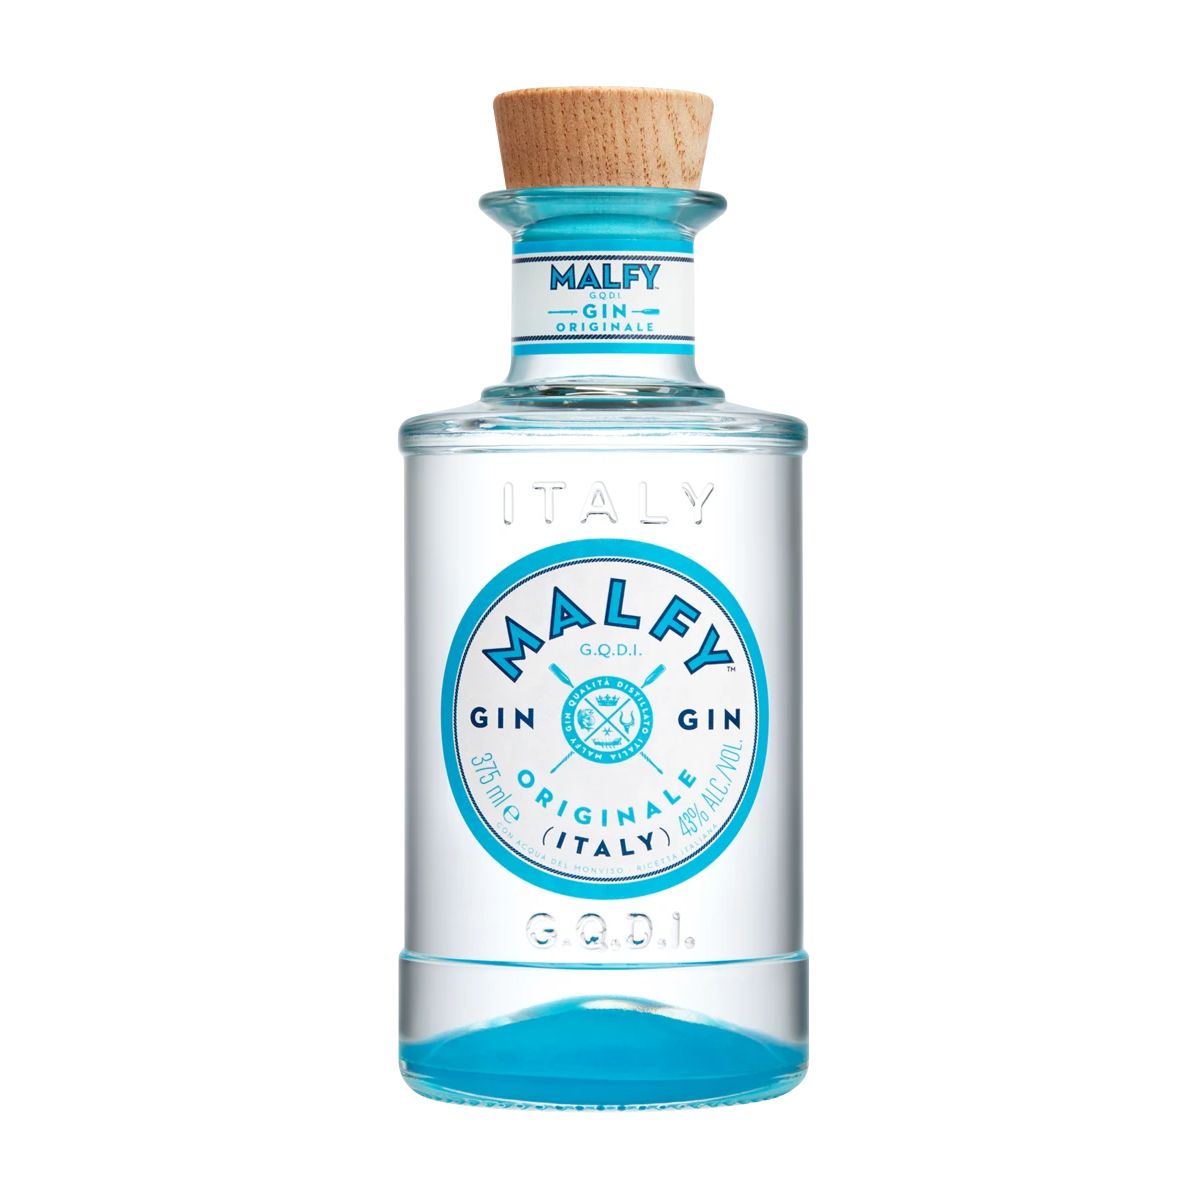 Malfy Gin ORIGINALE 41% Vol. 0,7l in Giftbox with glass